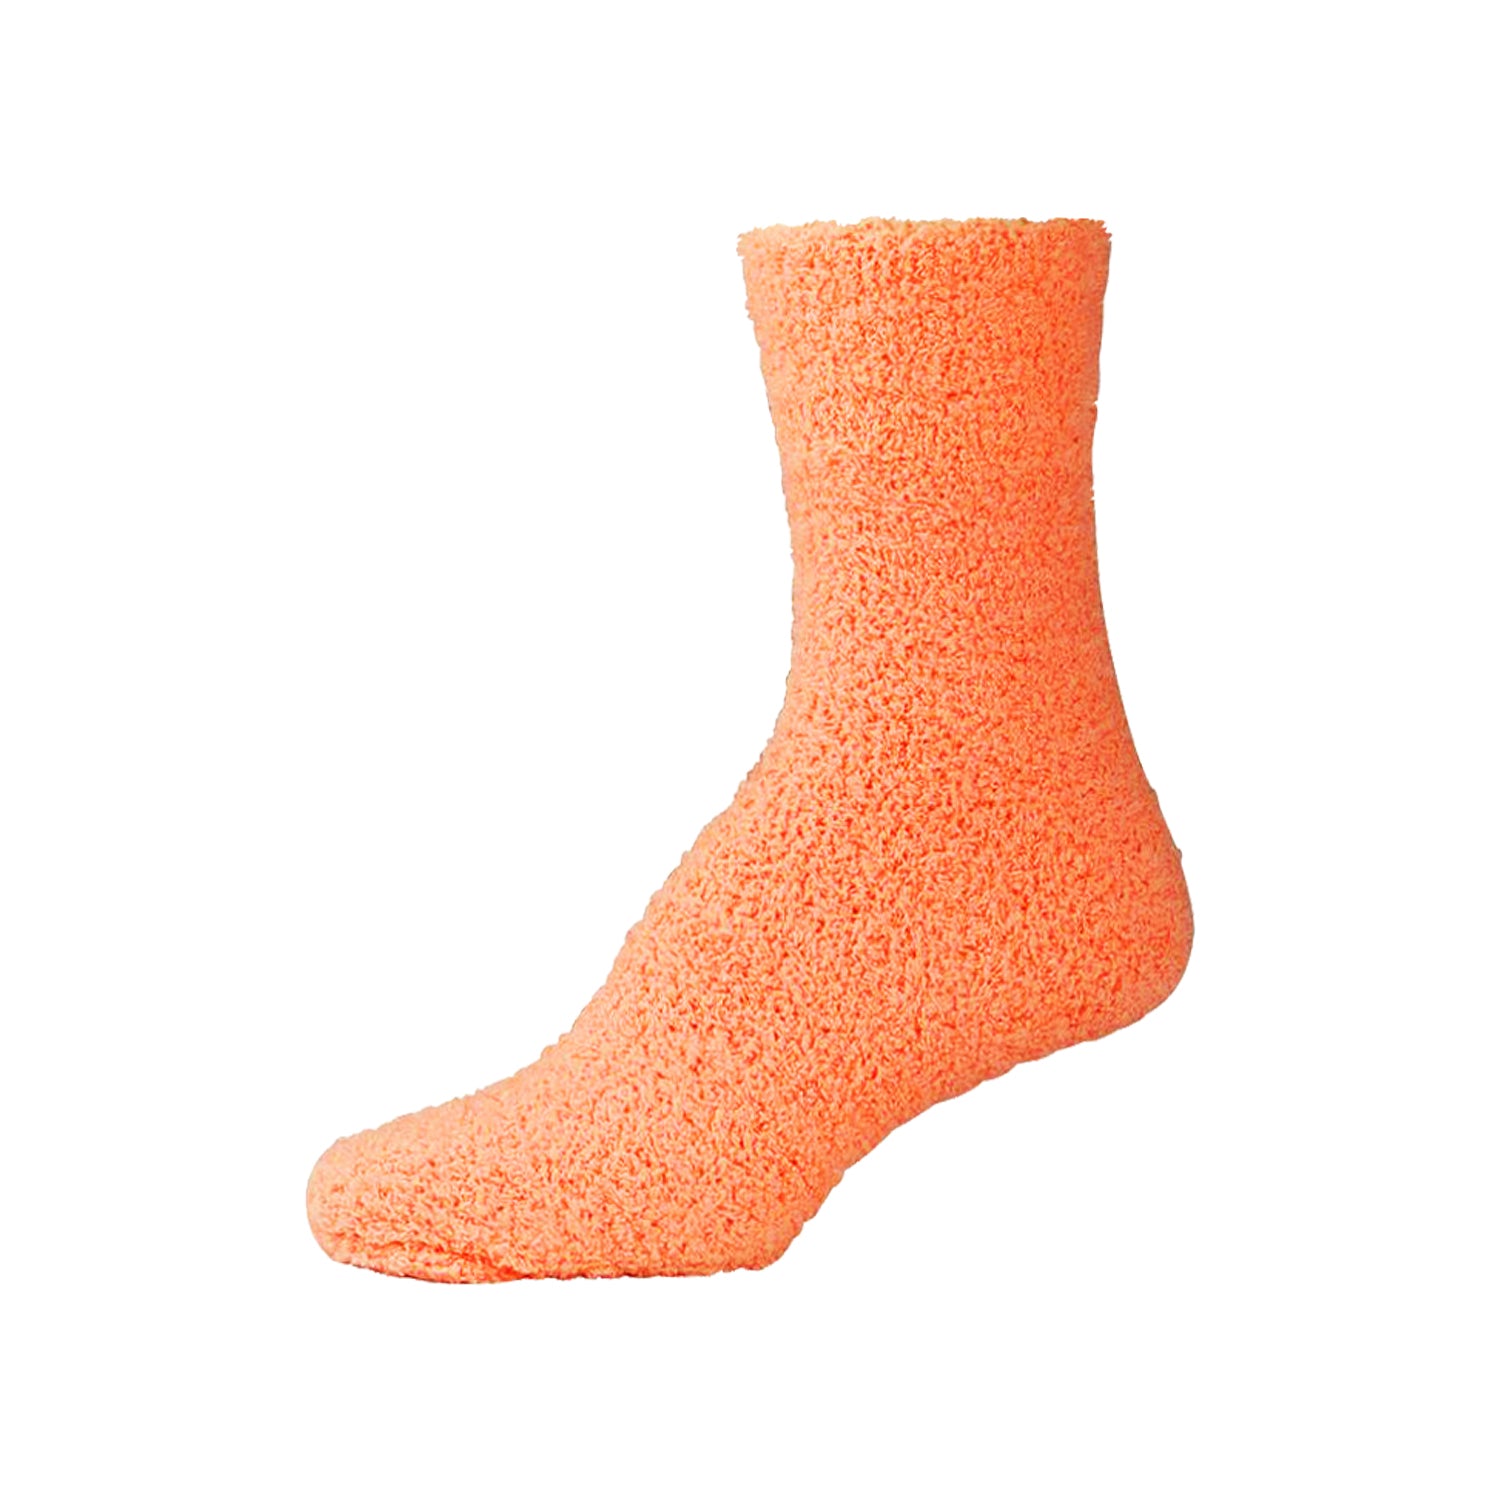 Womens Fluffy Orange Fuzzy Socks